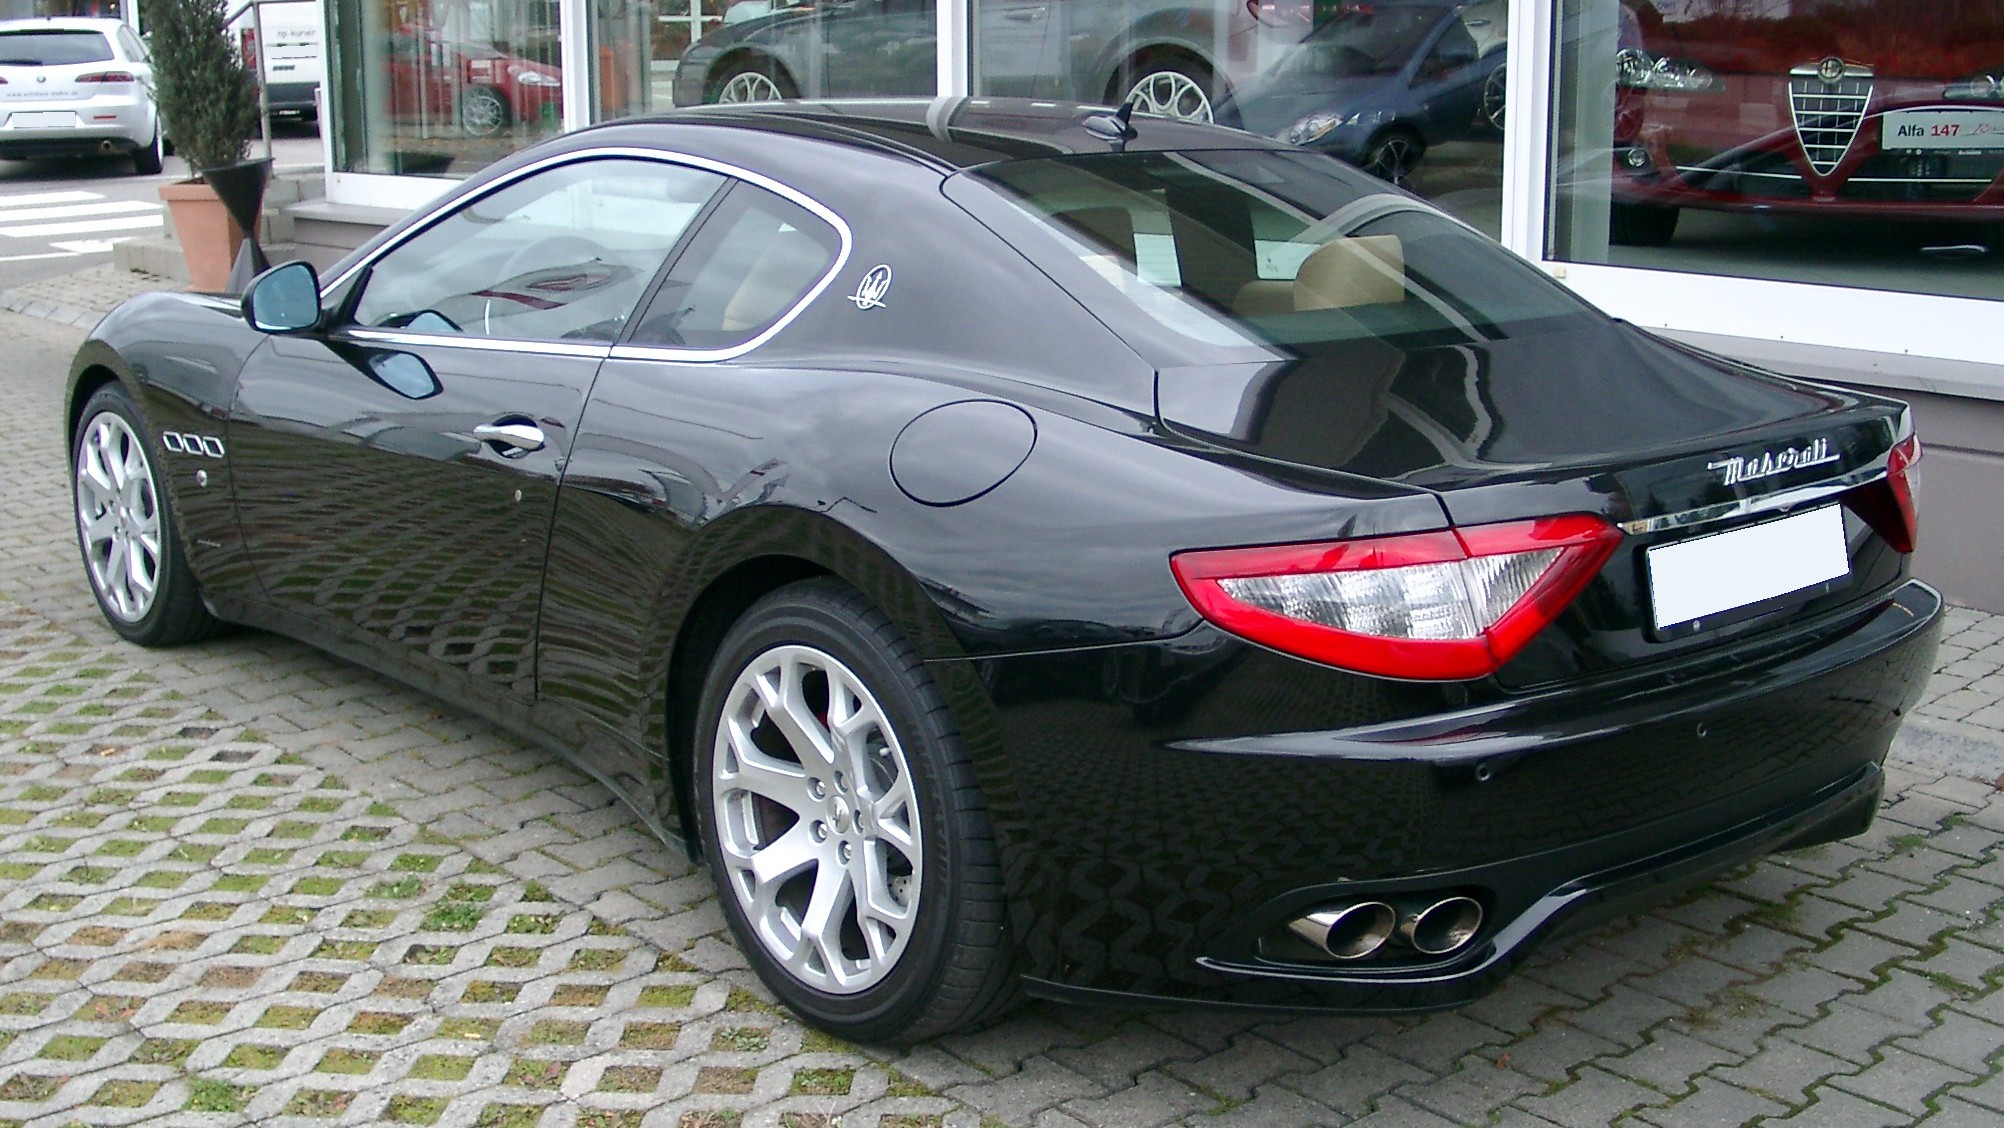 Maserati #8